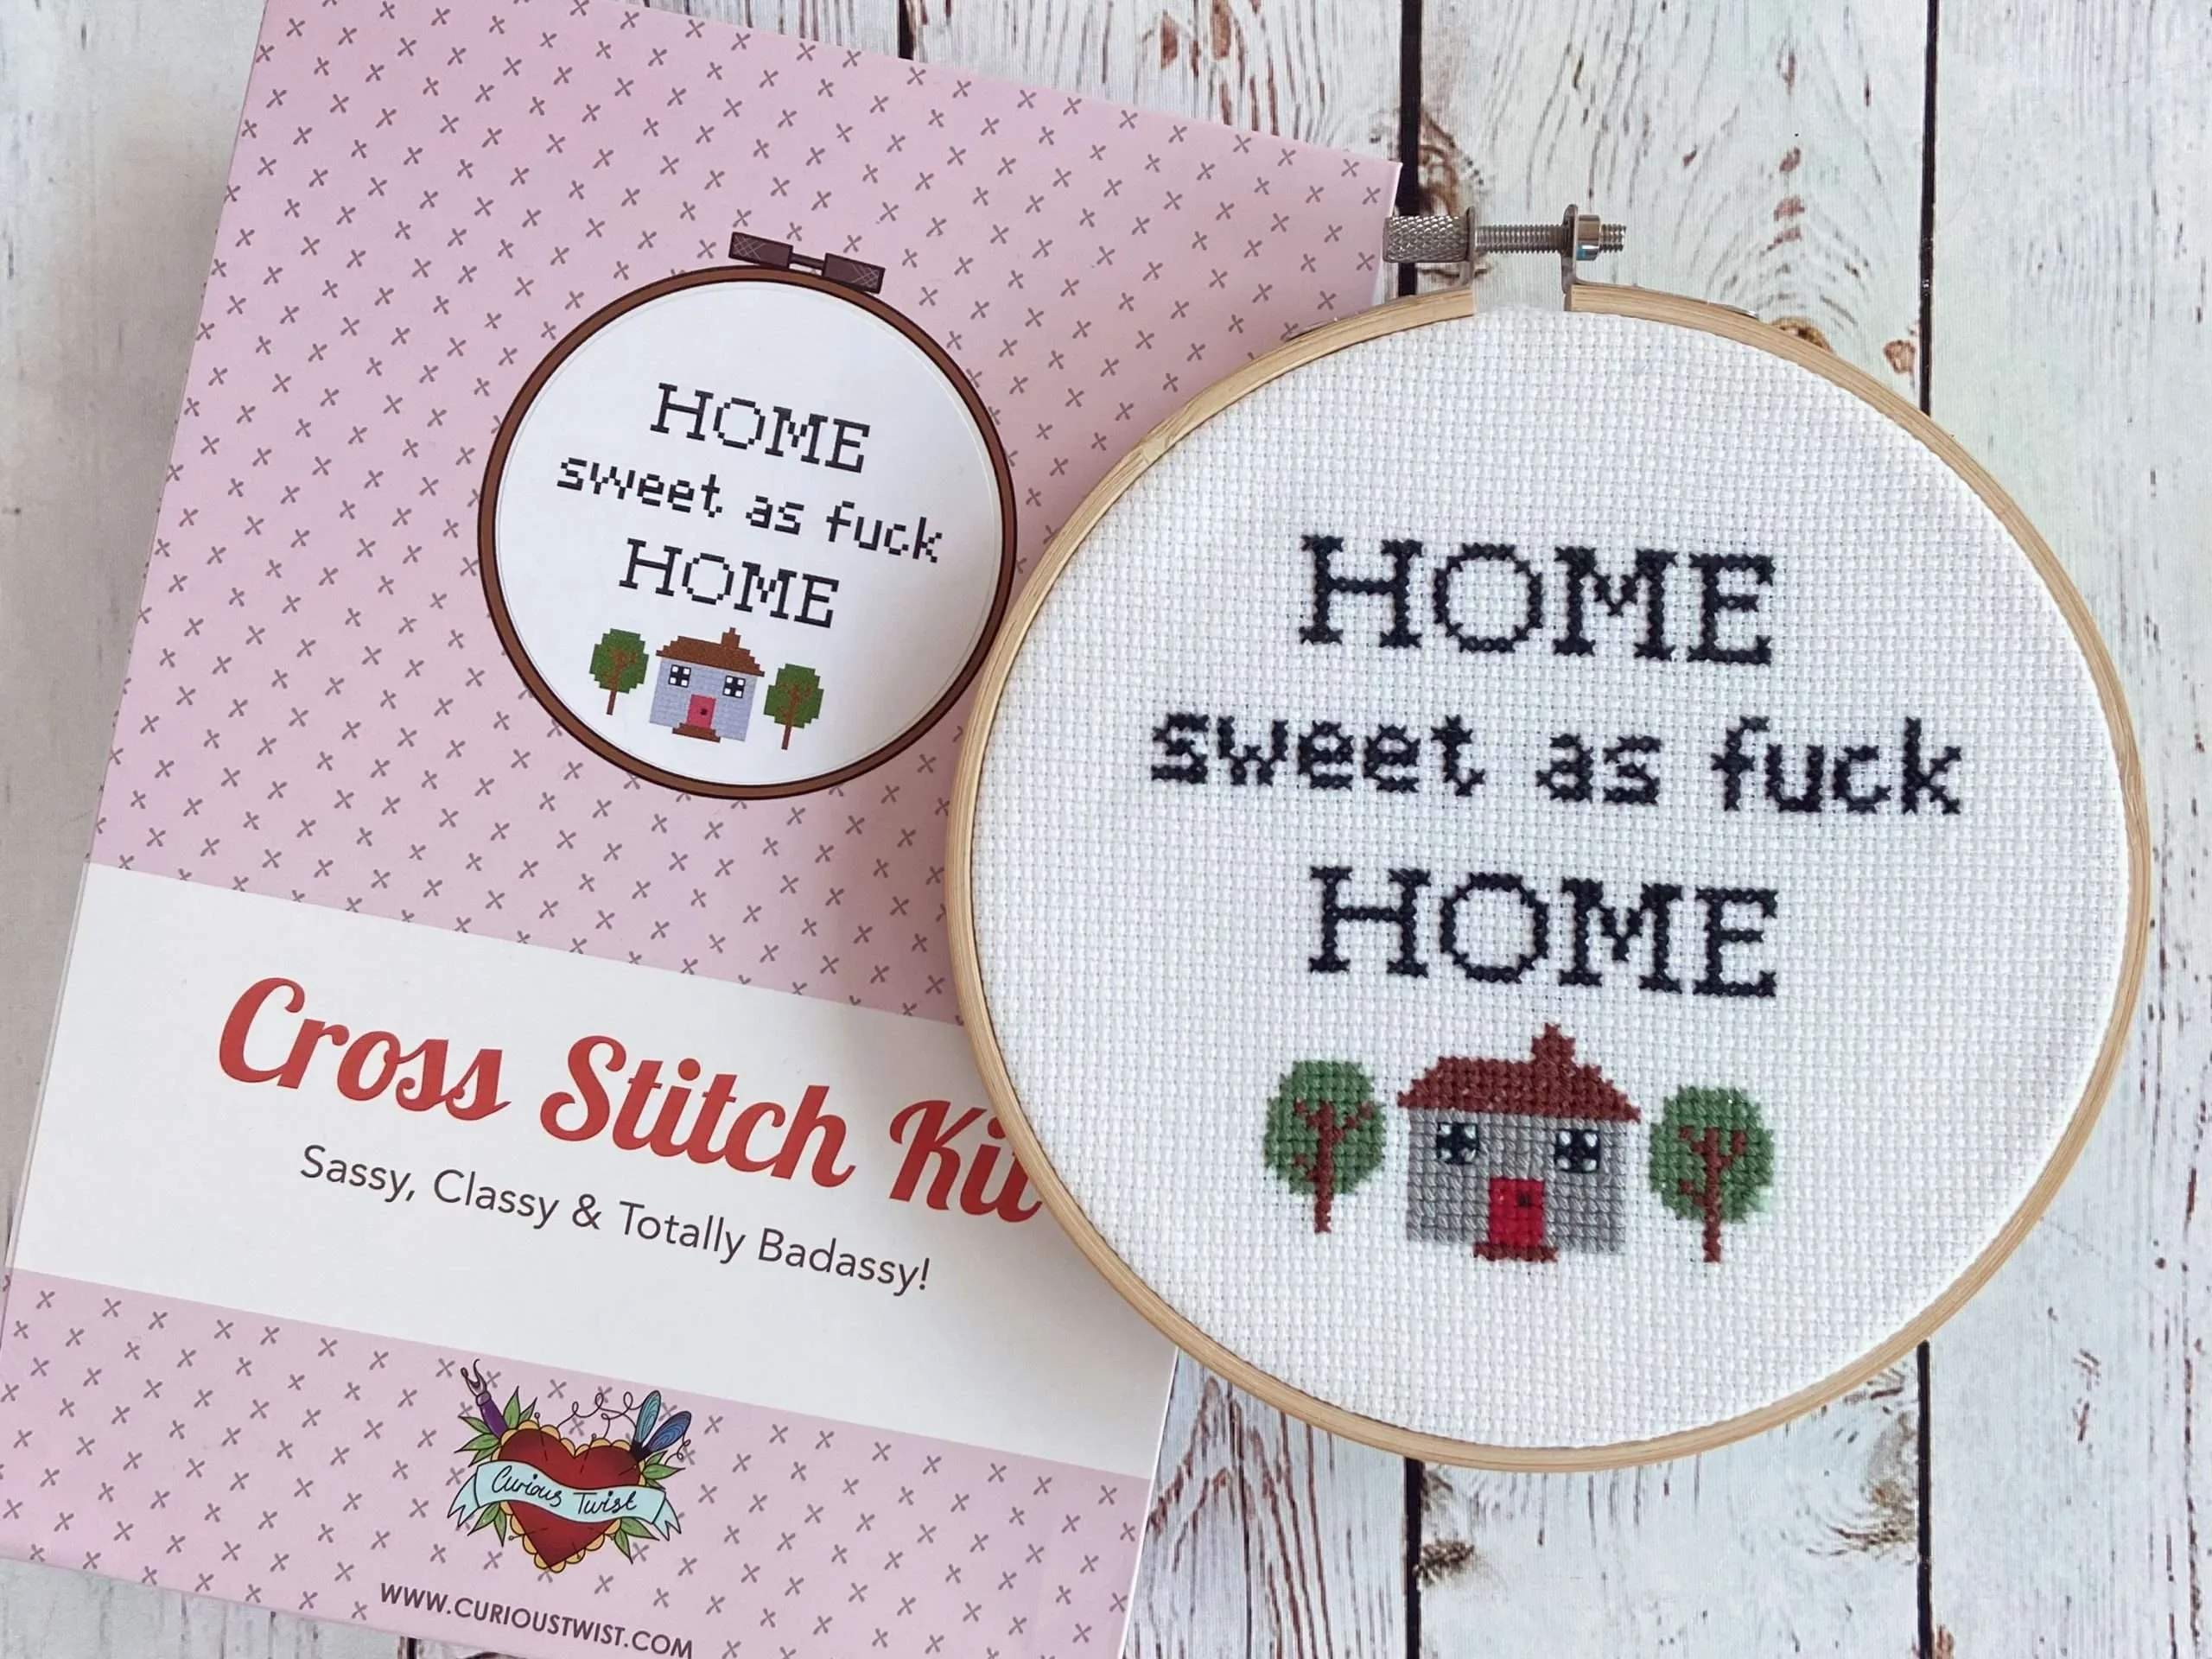 Home - Cross Stitch Kit And Pattern